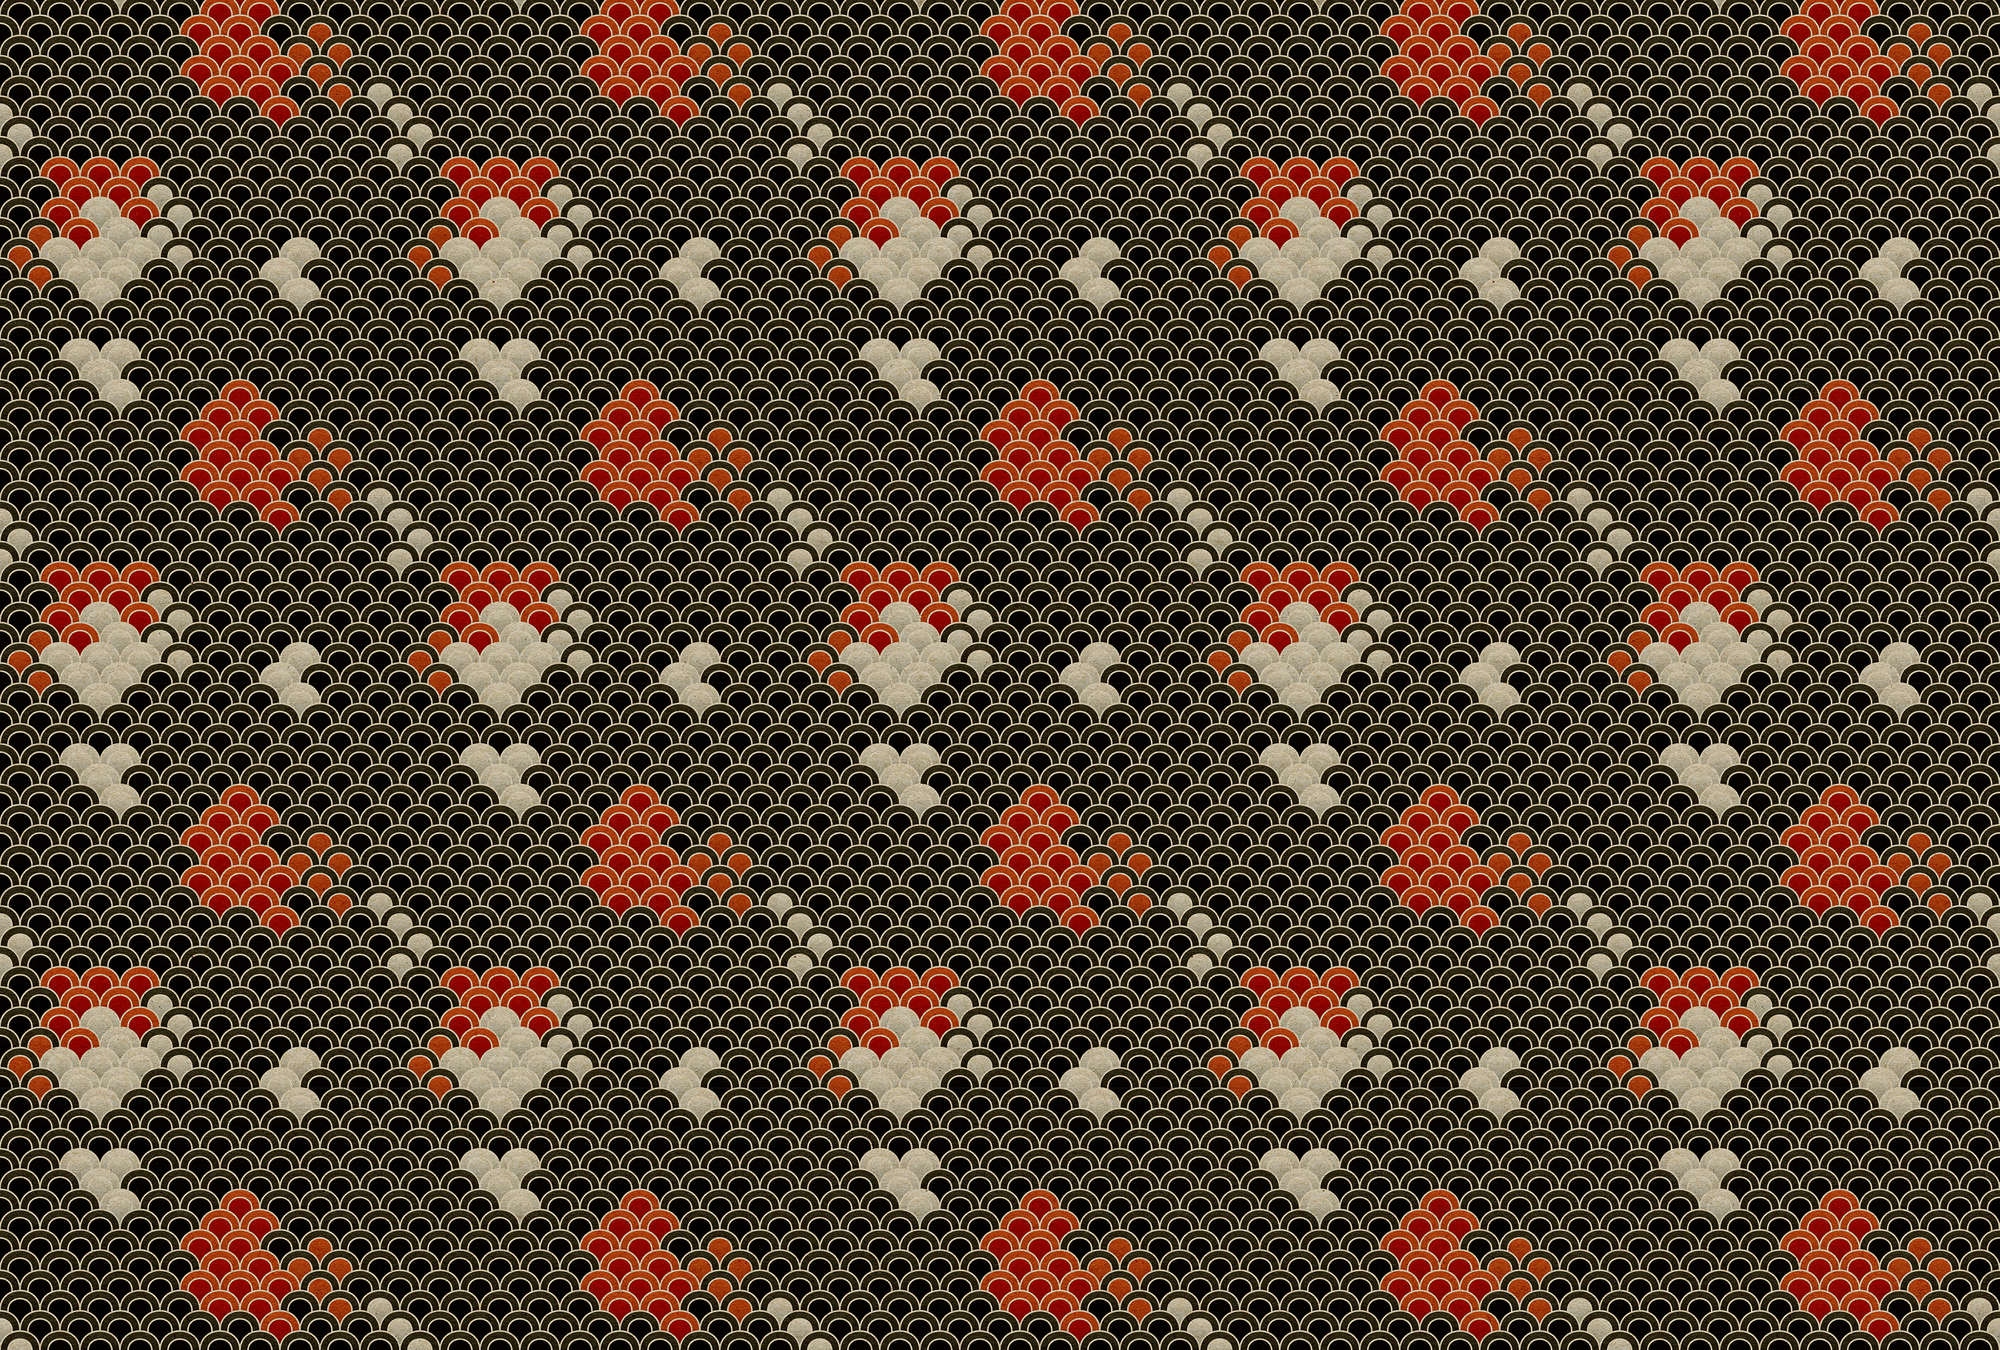             Koi 1 - Dark Koi Pond Wallpaper - Cardboard Structure - Beige, Red | Pearl Smooth Non-woven
        